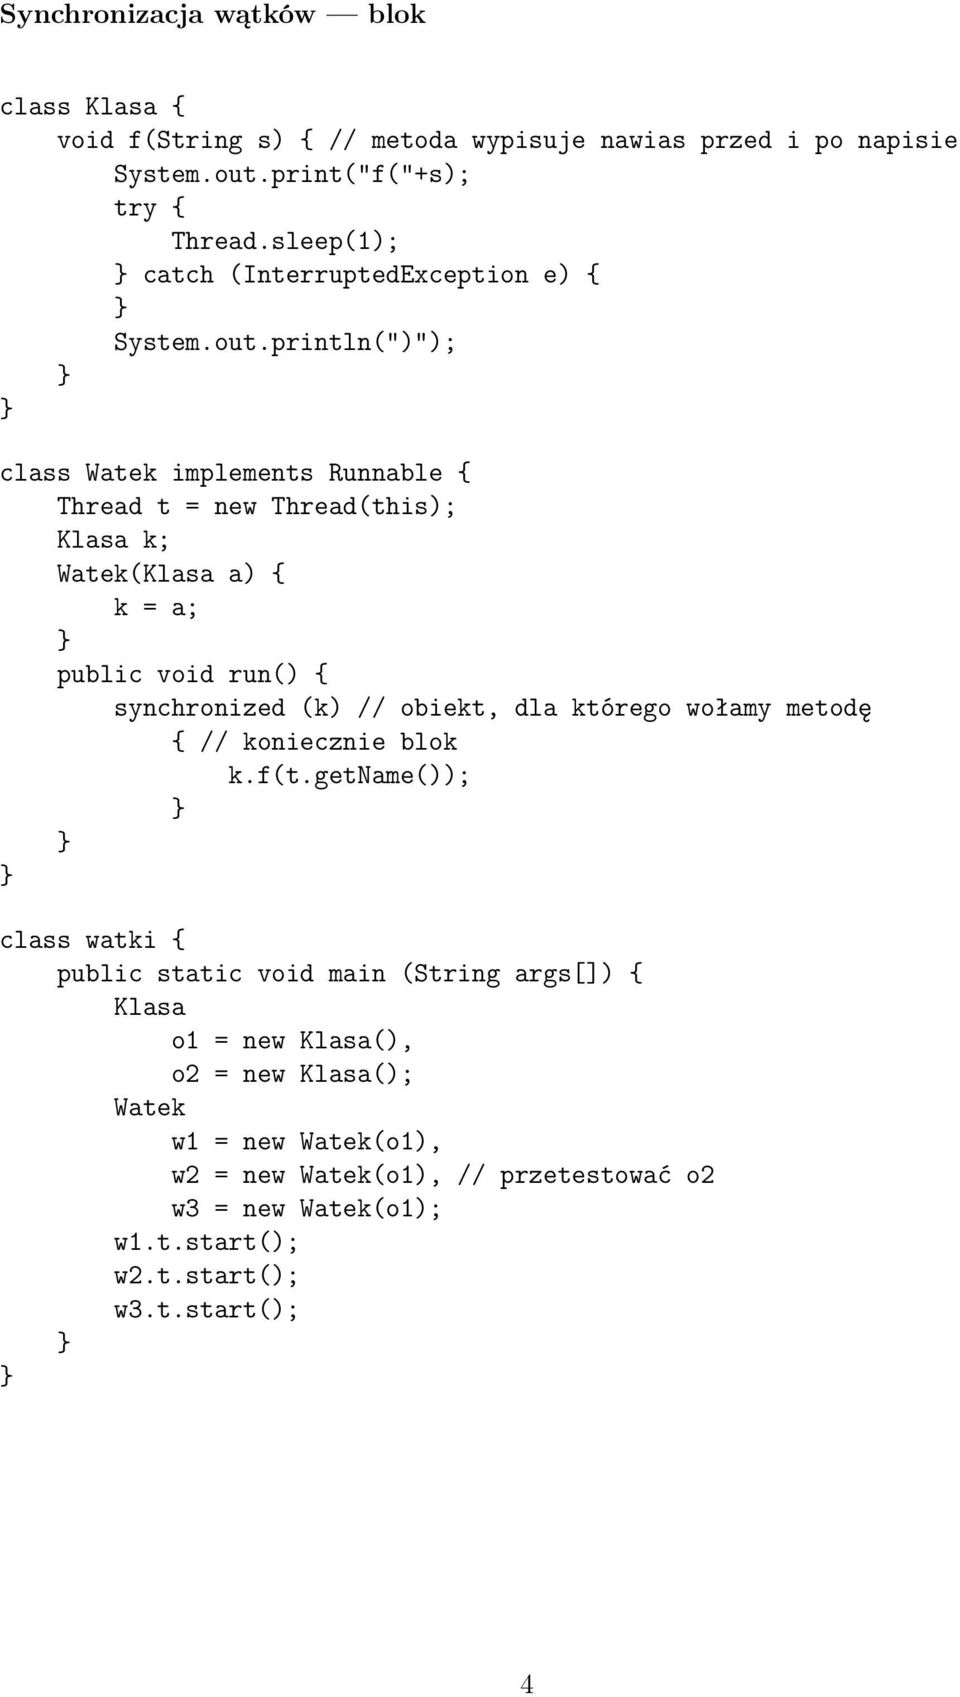 println(")"); class Watek implements Runnable Thread t = new Thread(this); Klasa k; Watek(Klasa a) k = a; public void run() synchronized (k) // obiekt,